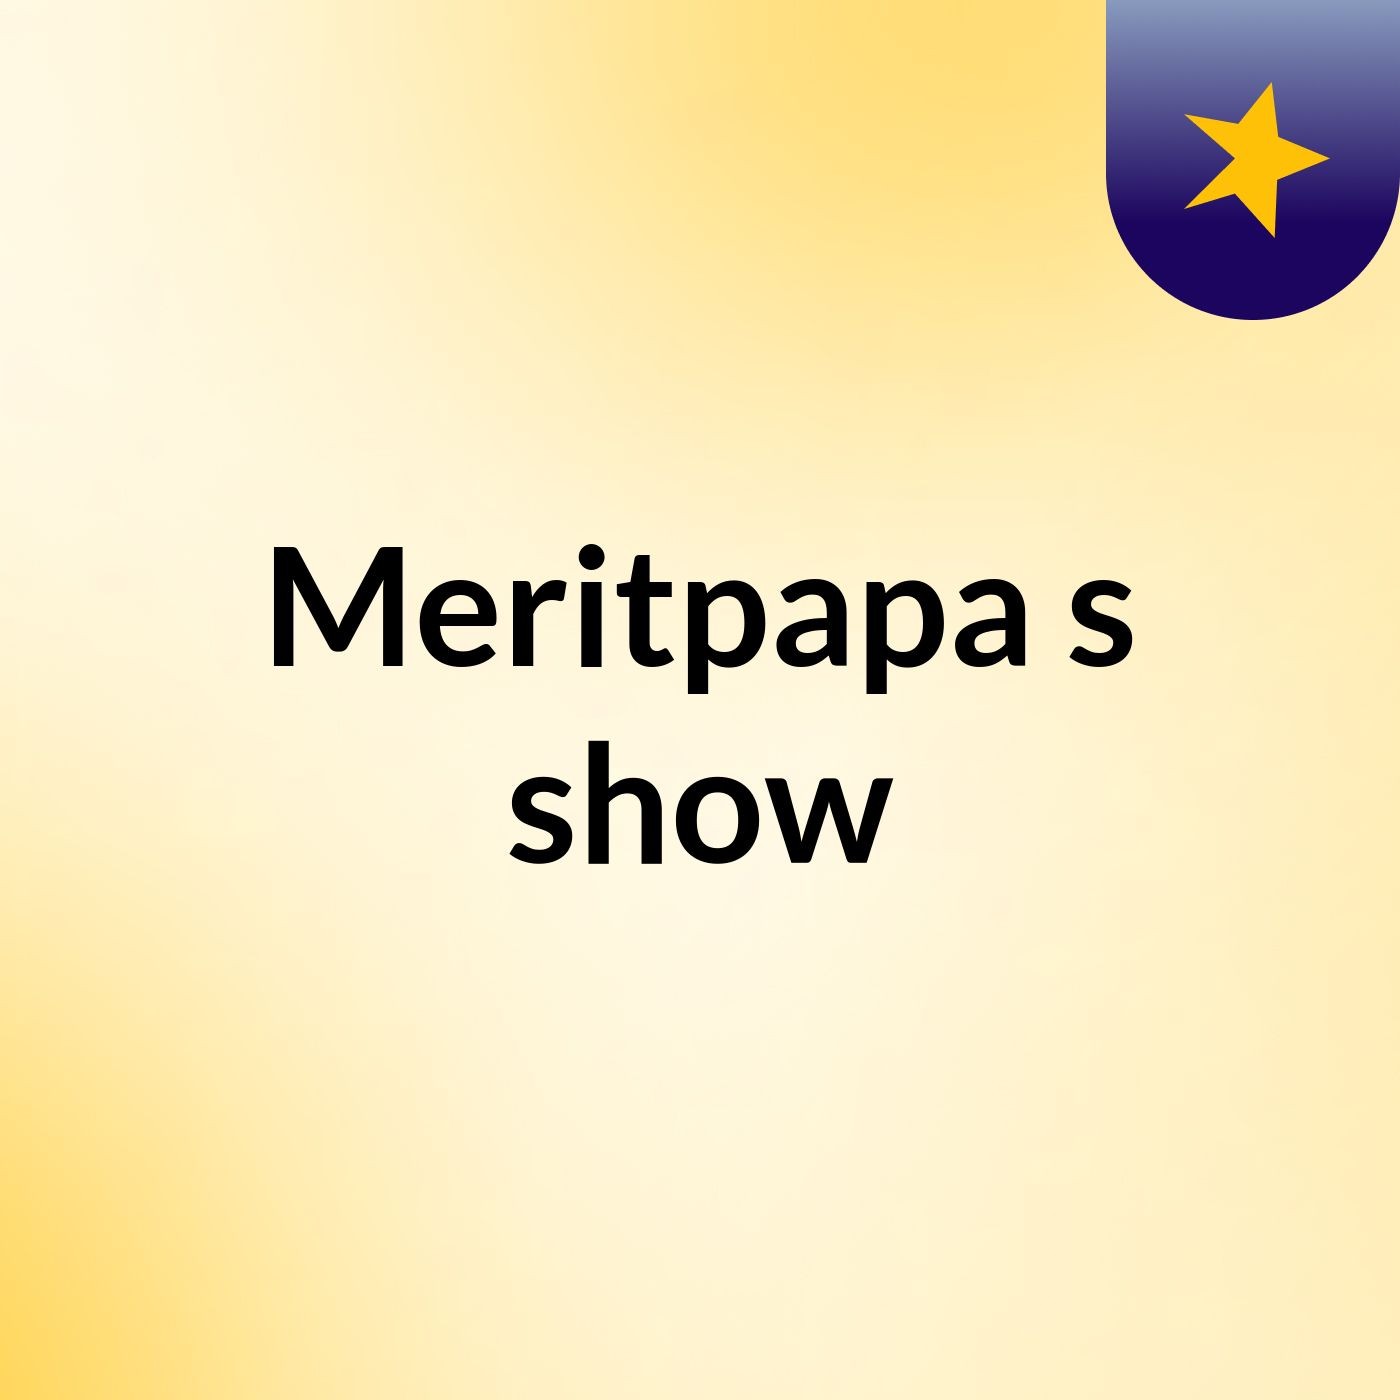 Meritpapa's show